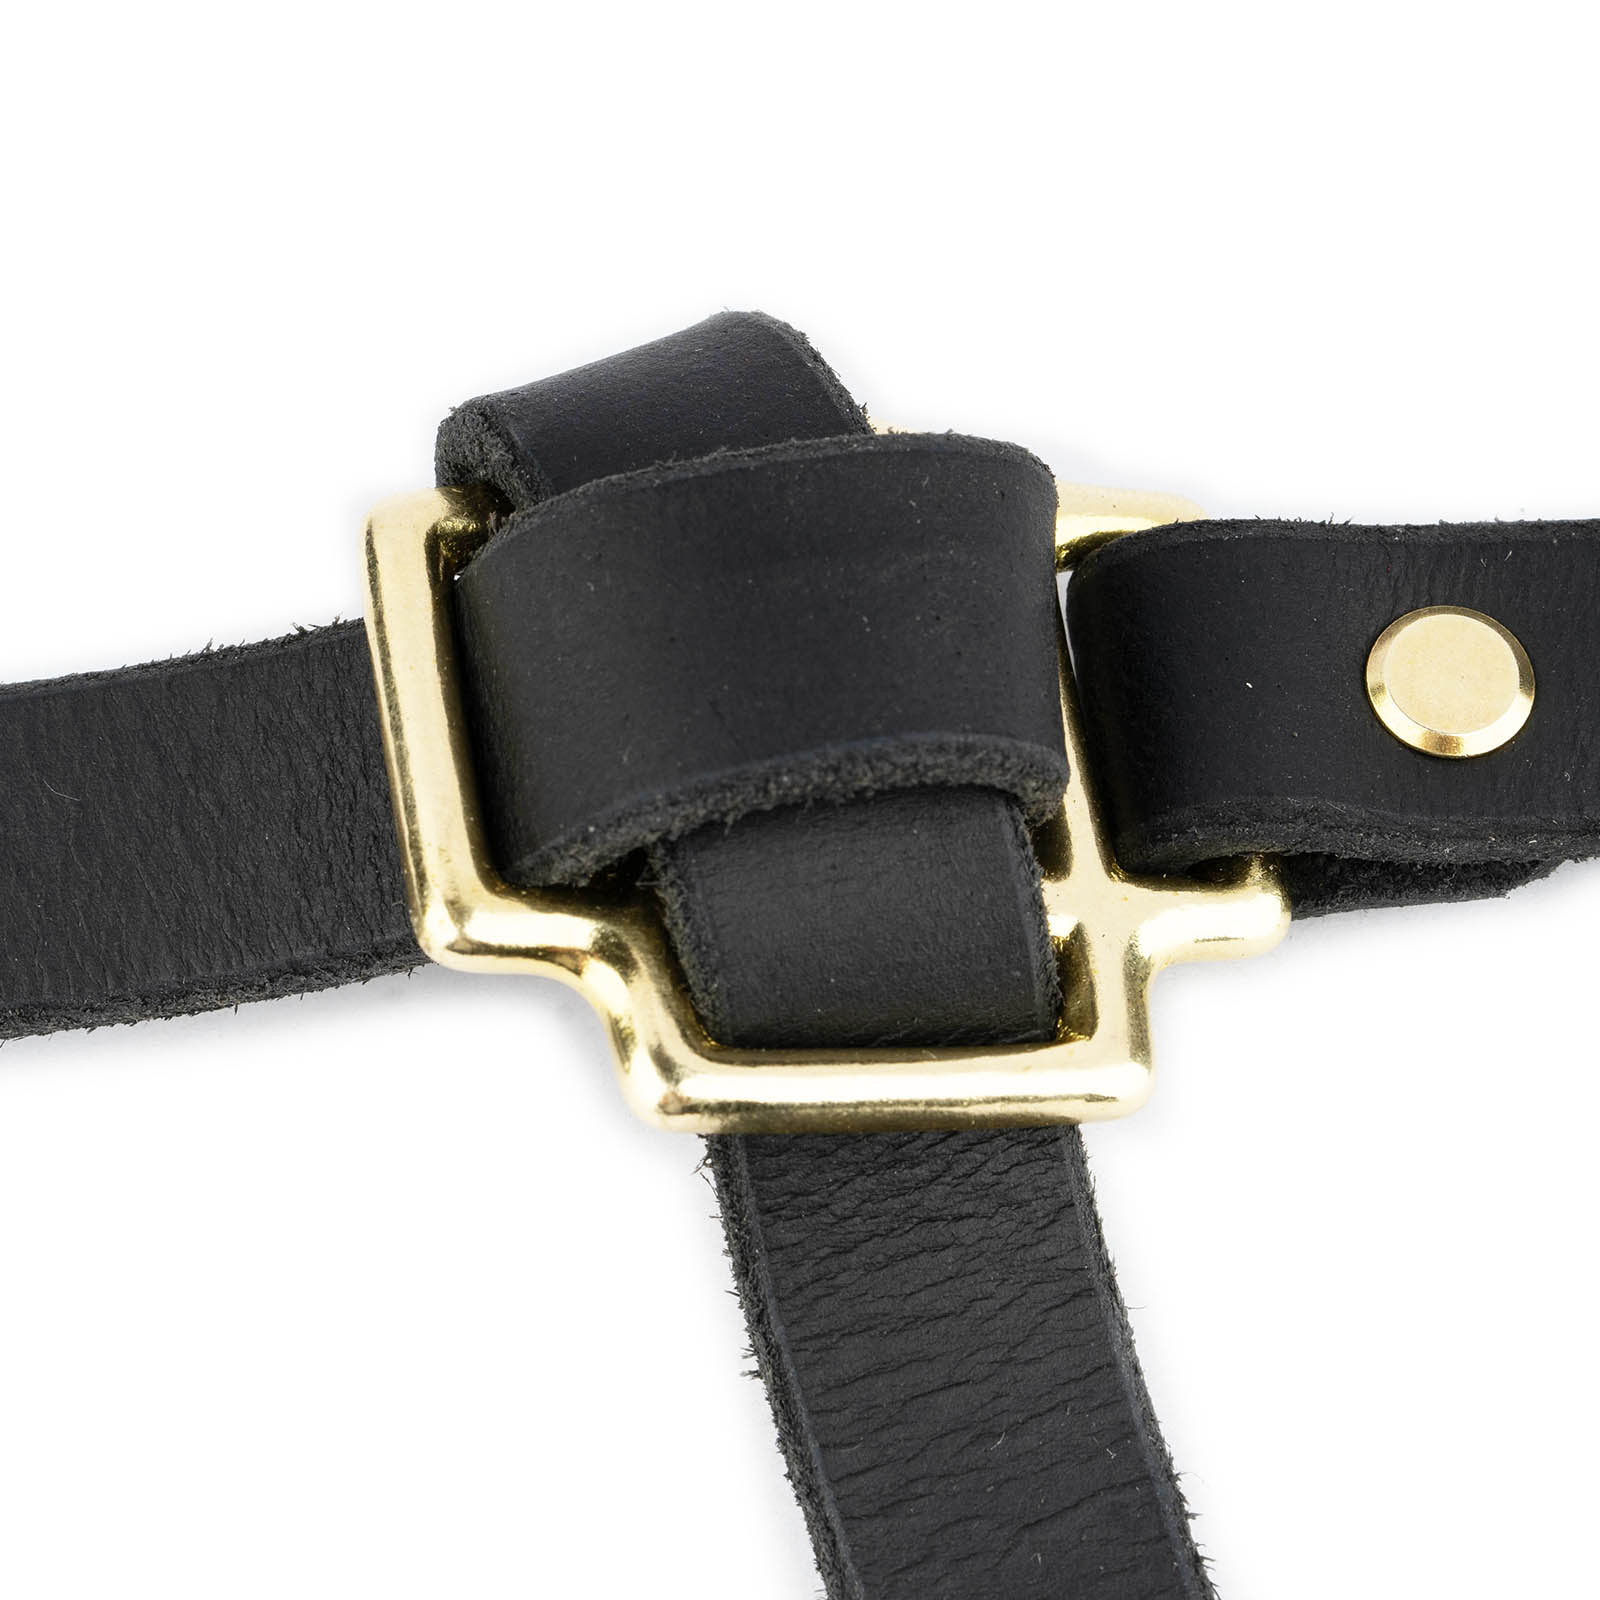 Buy Medieval Belt Knotted Gold Buckle Black Leather ...